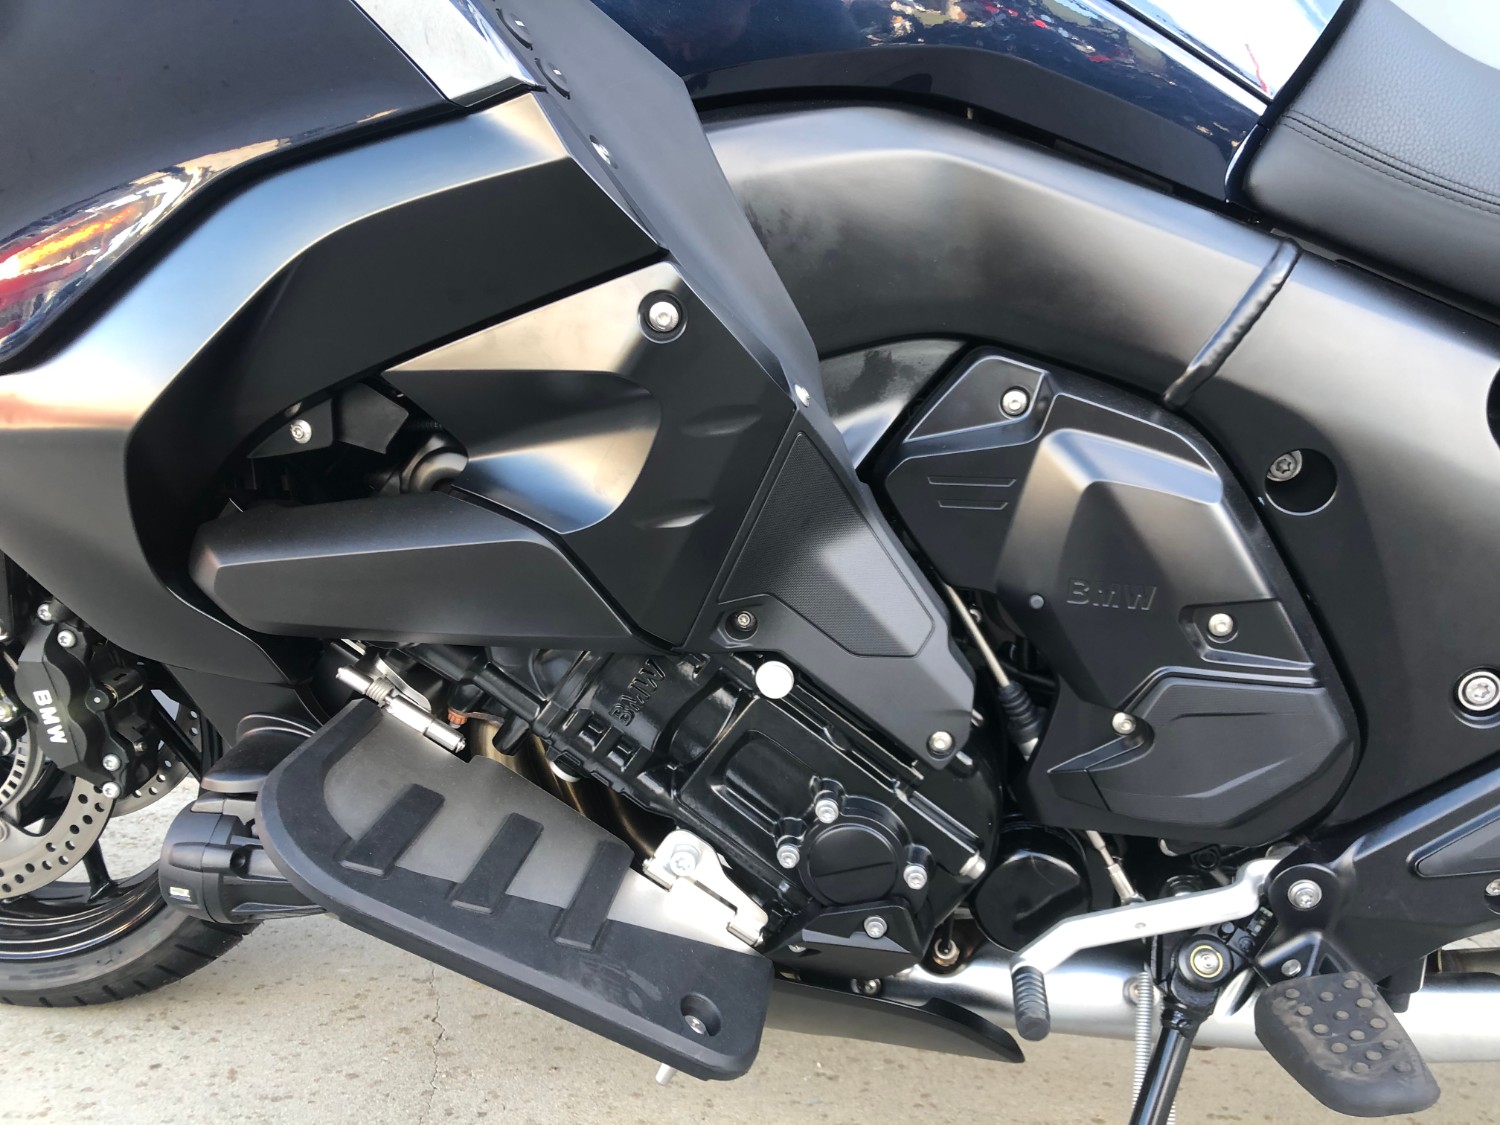 2019 BMW K1600 B Deluxe Motorcycle Image 8